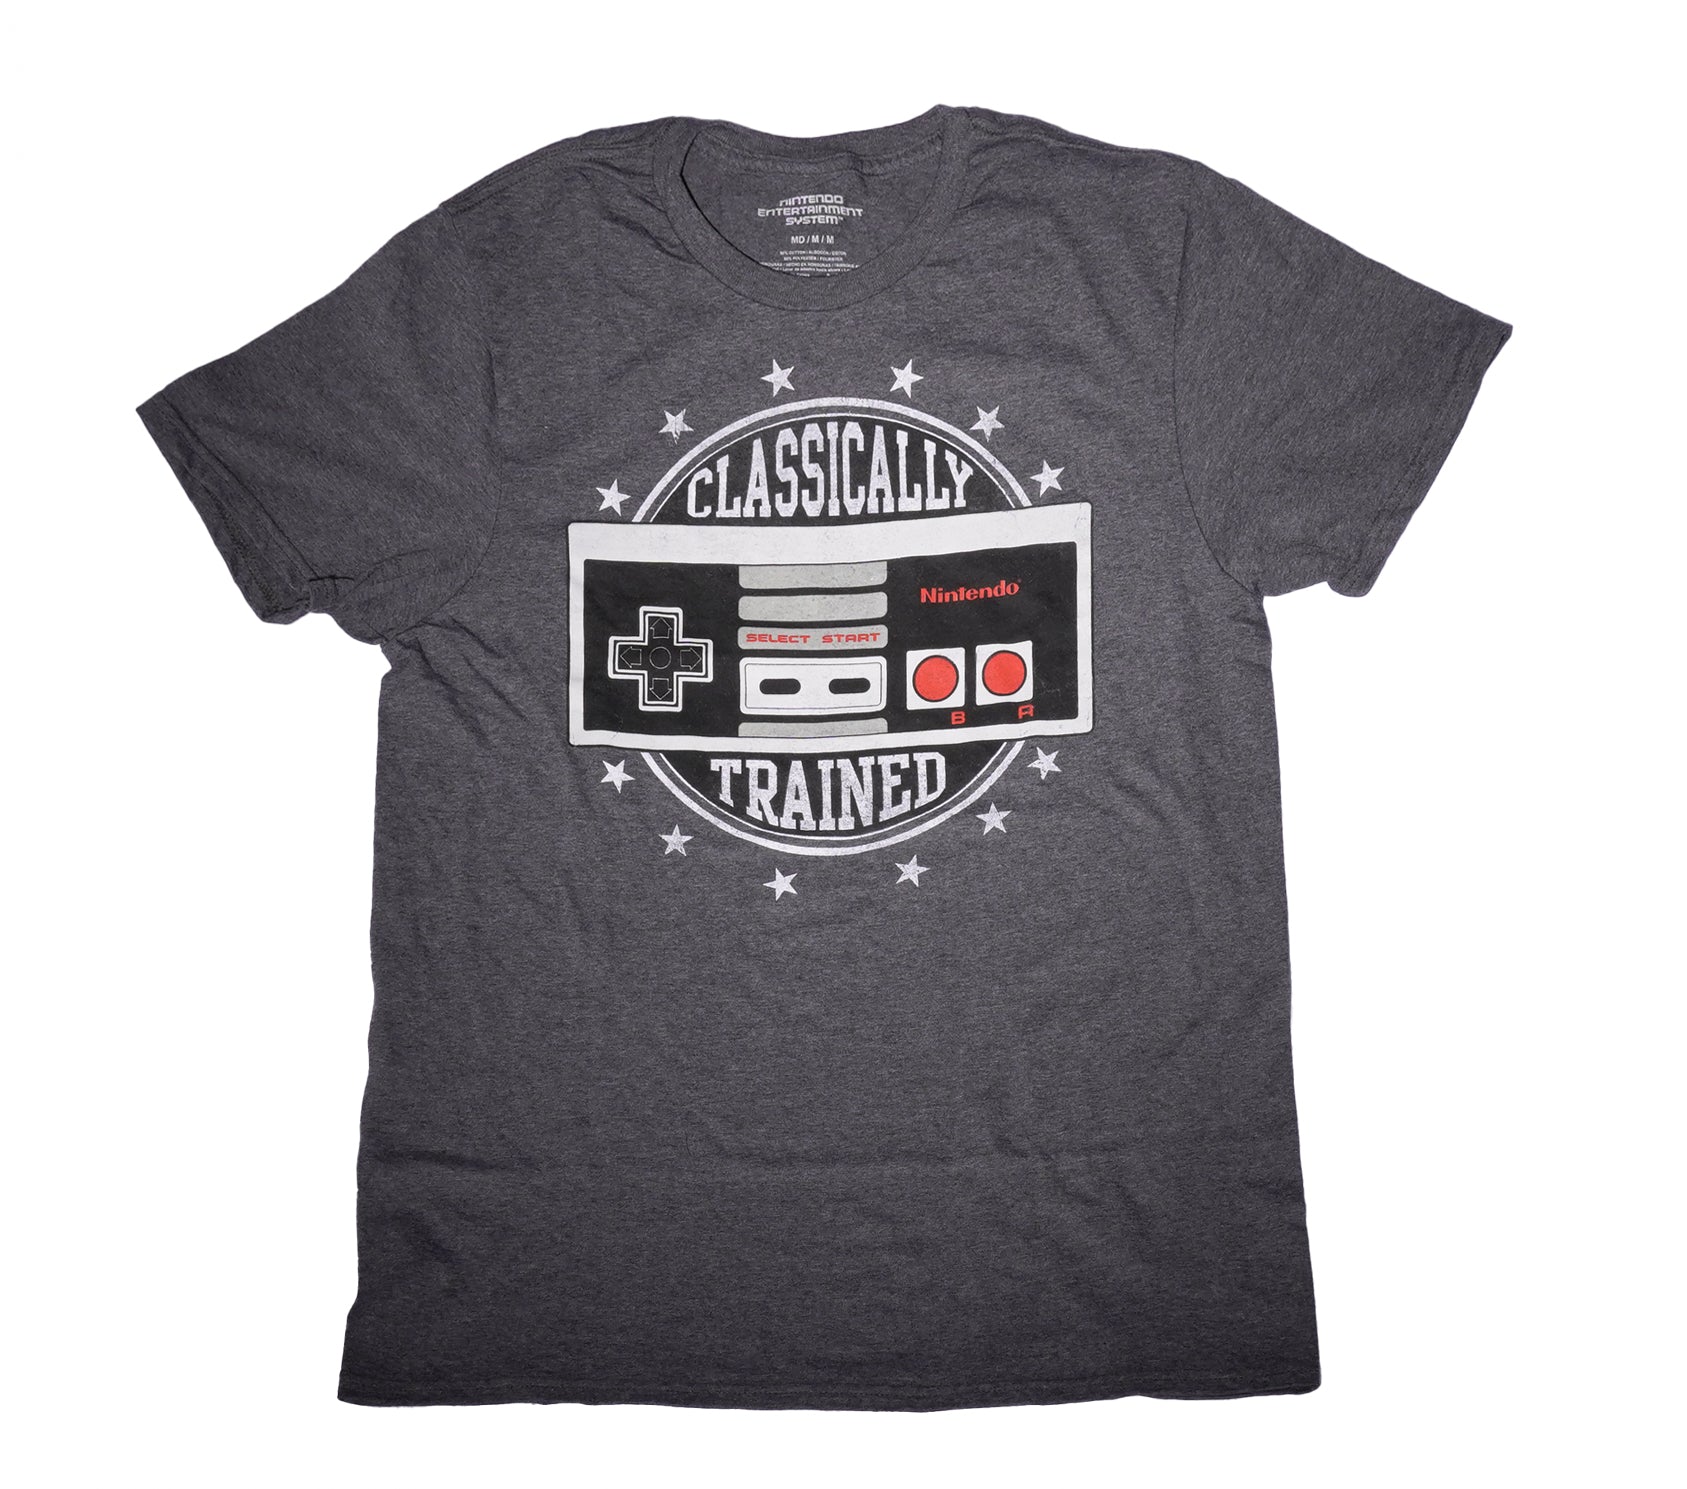 Nintendo Mens T-Shirt - Classically Trained Ornate NES Controller